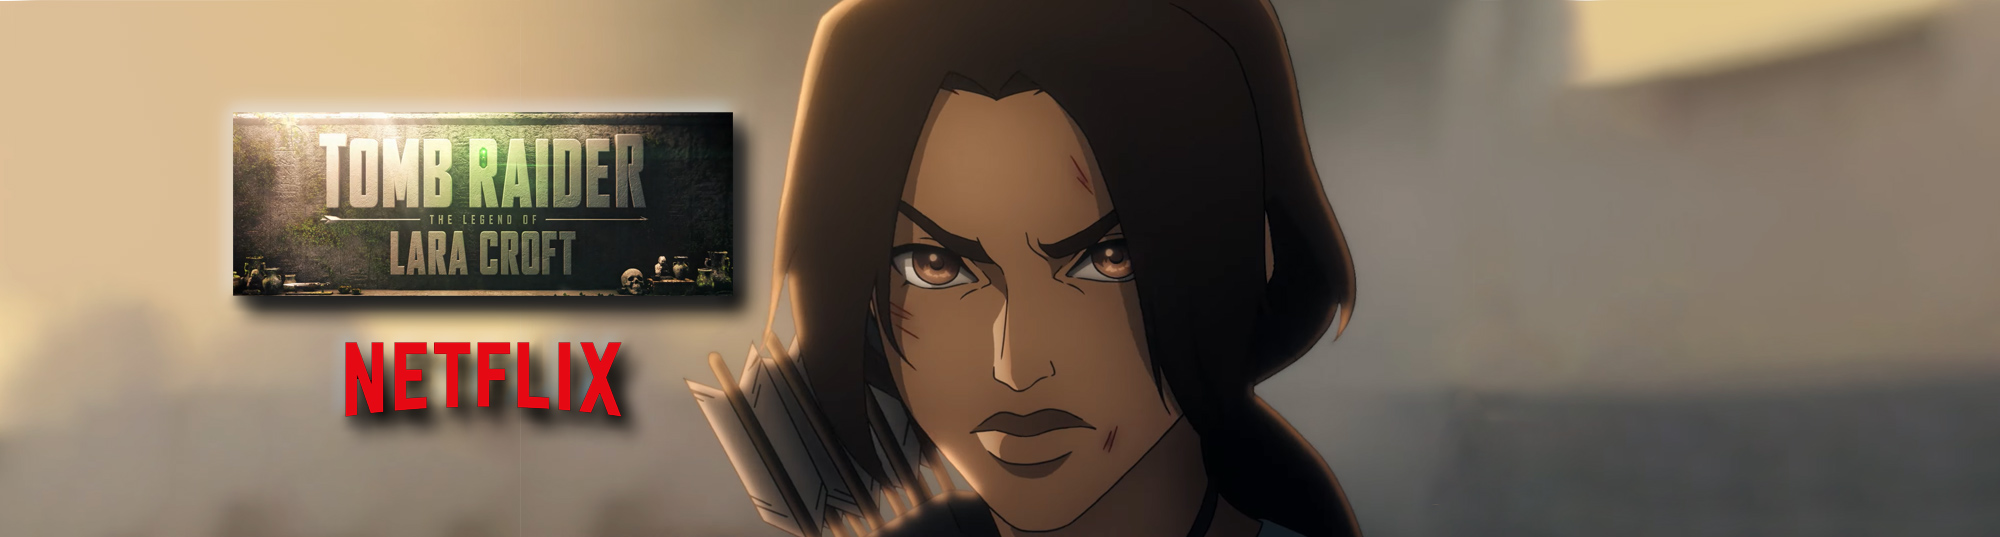 Netflix Has Announced A Tomb Raider Anime Series